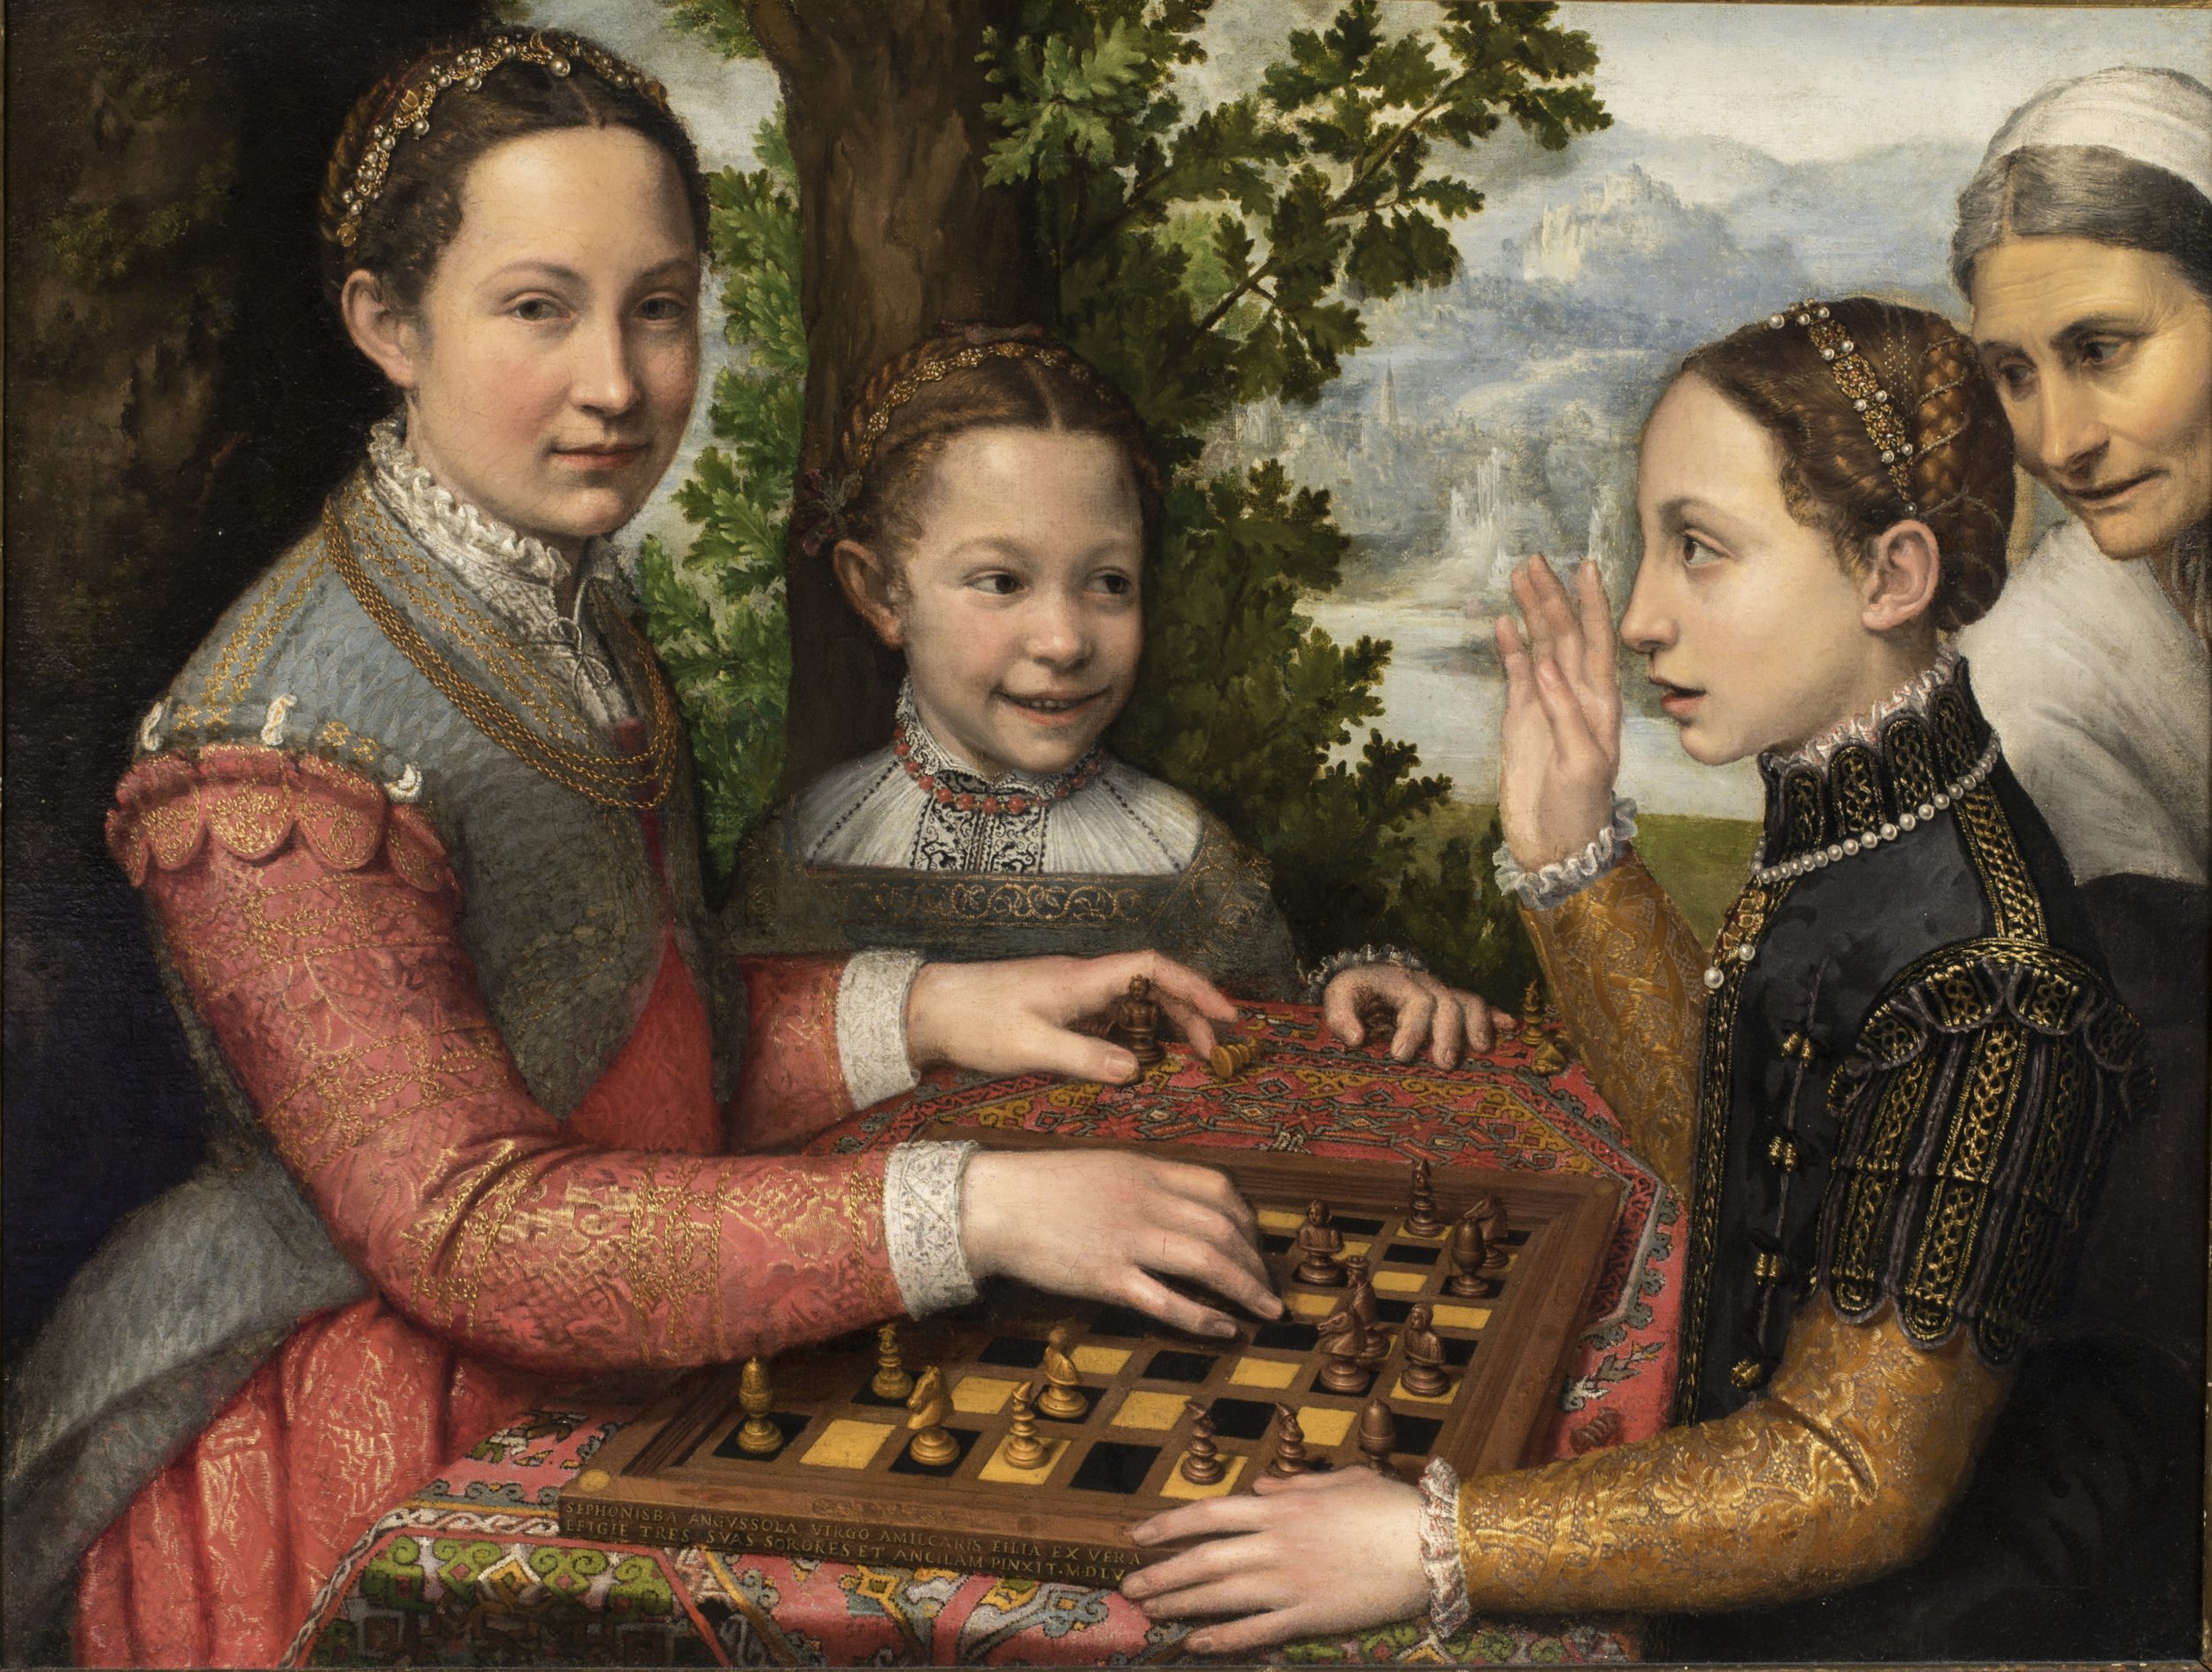 SOFONISBA ANGUISSOLA (C. 1532 –1625), THE CHESS GAME, 1555, NATIONALMUSEUM, POZNAŃ, POLAND (LUCIASHOWN AT LEFT)